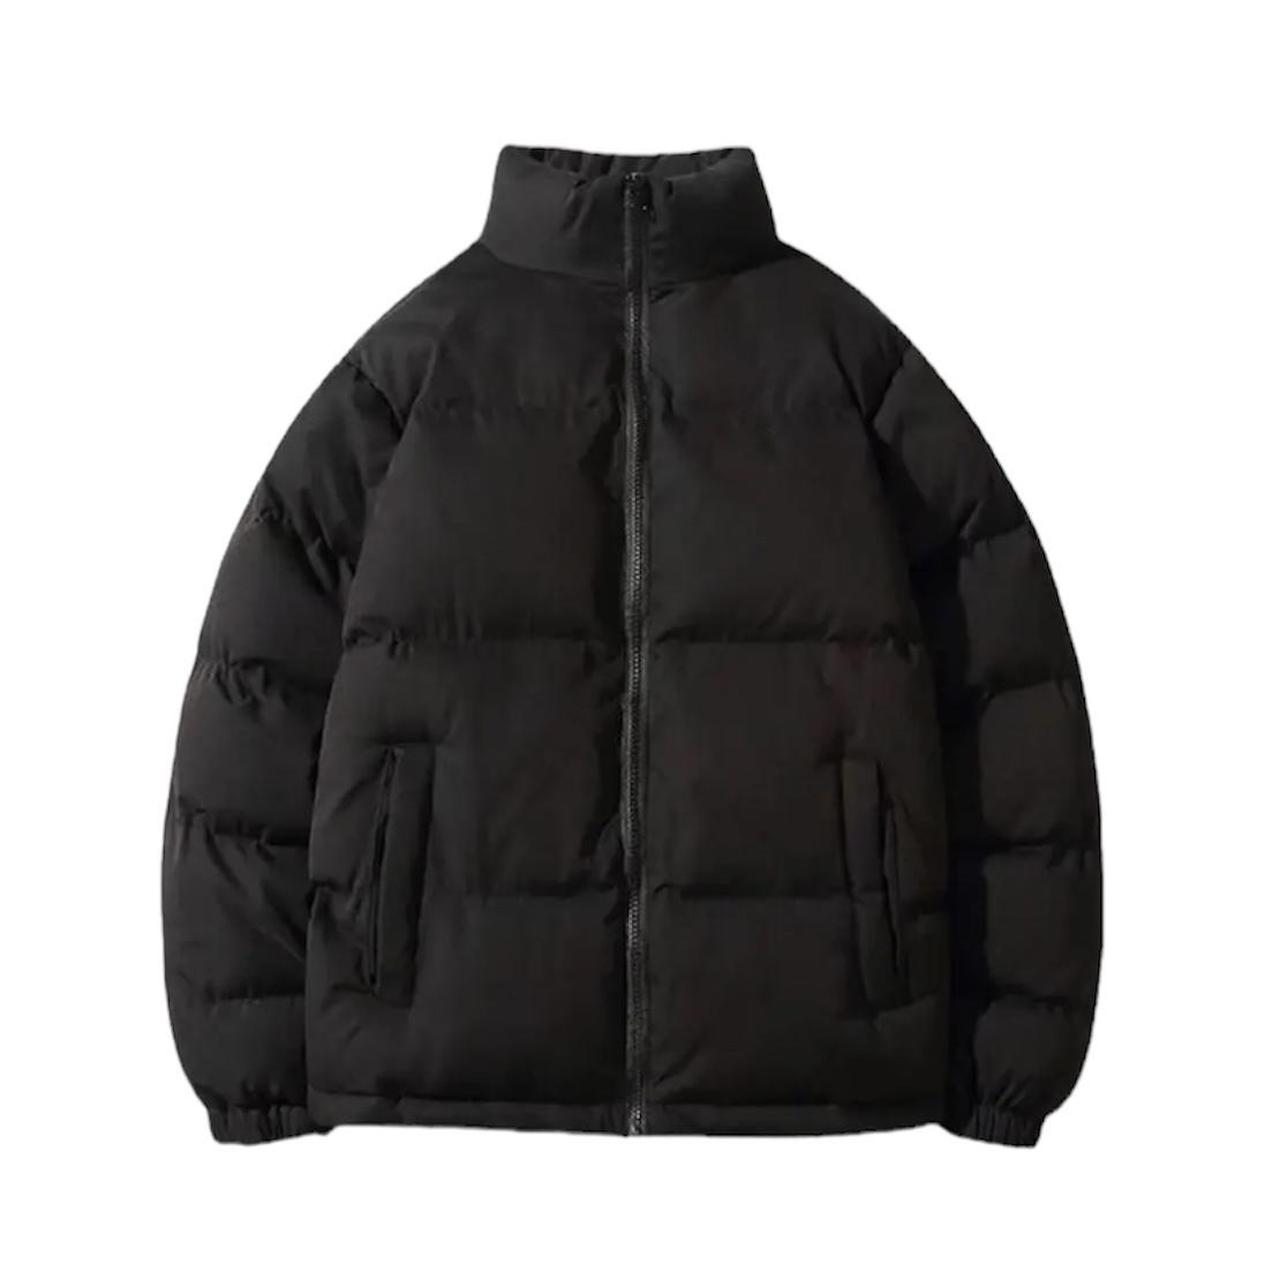 Y2K Style Thick Parka Jacket in Black Sizes S-XXL... - Depop